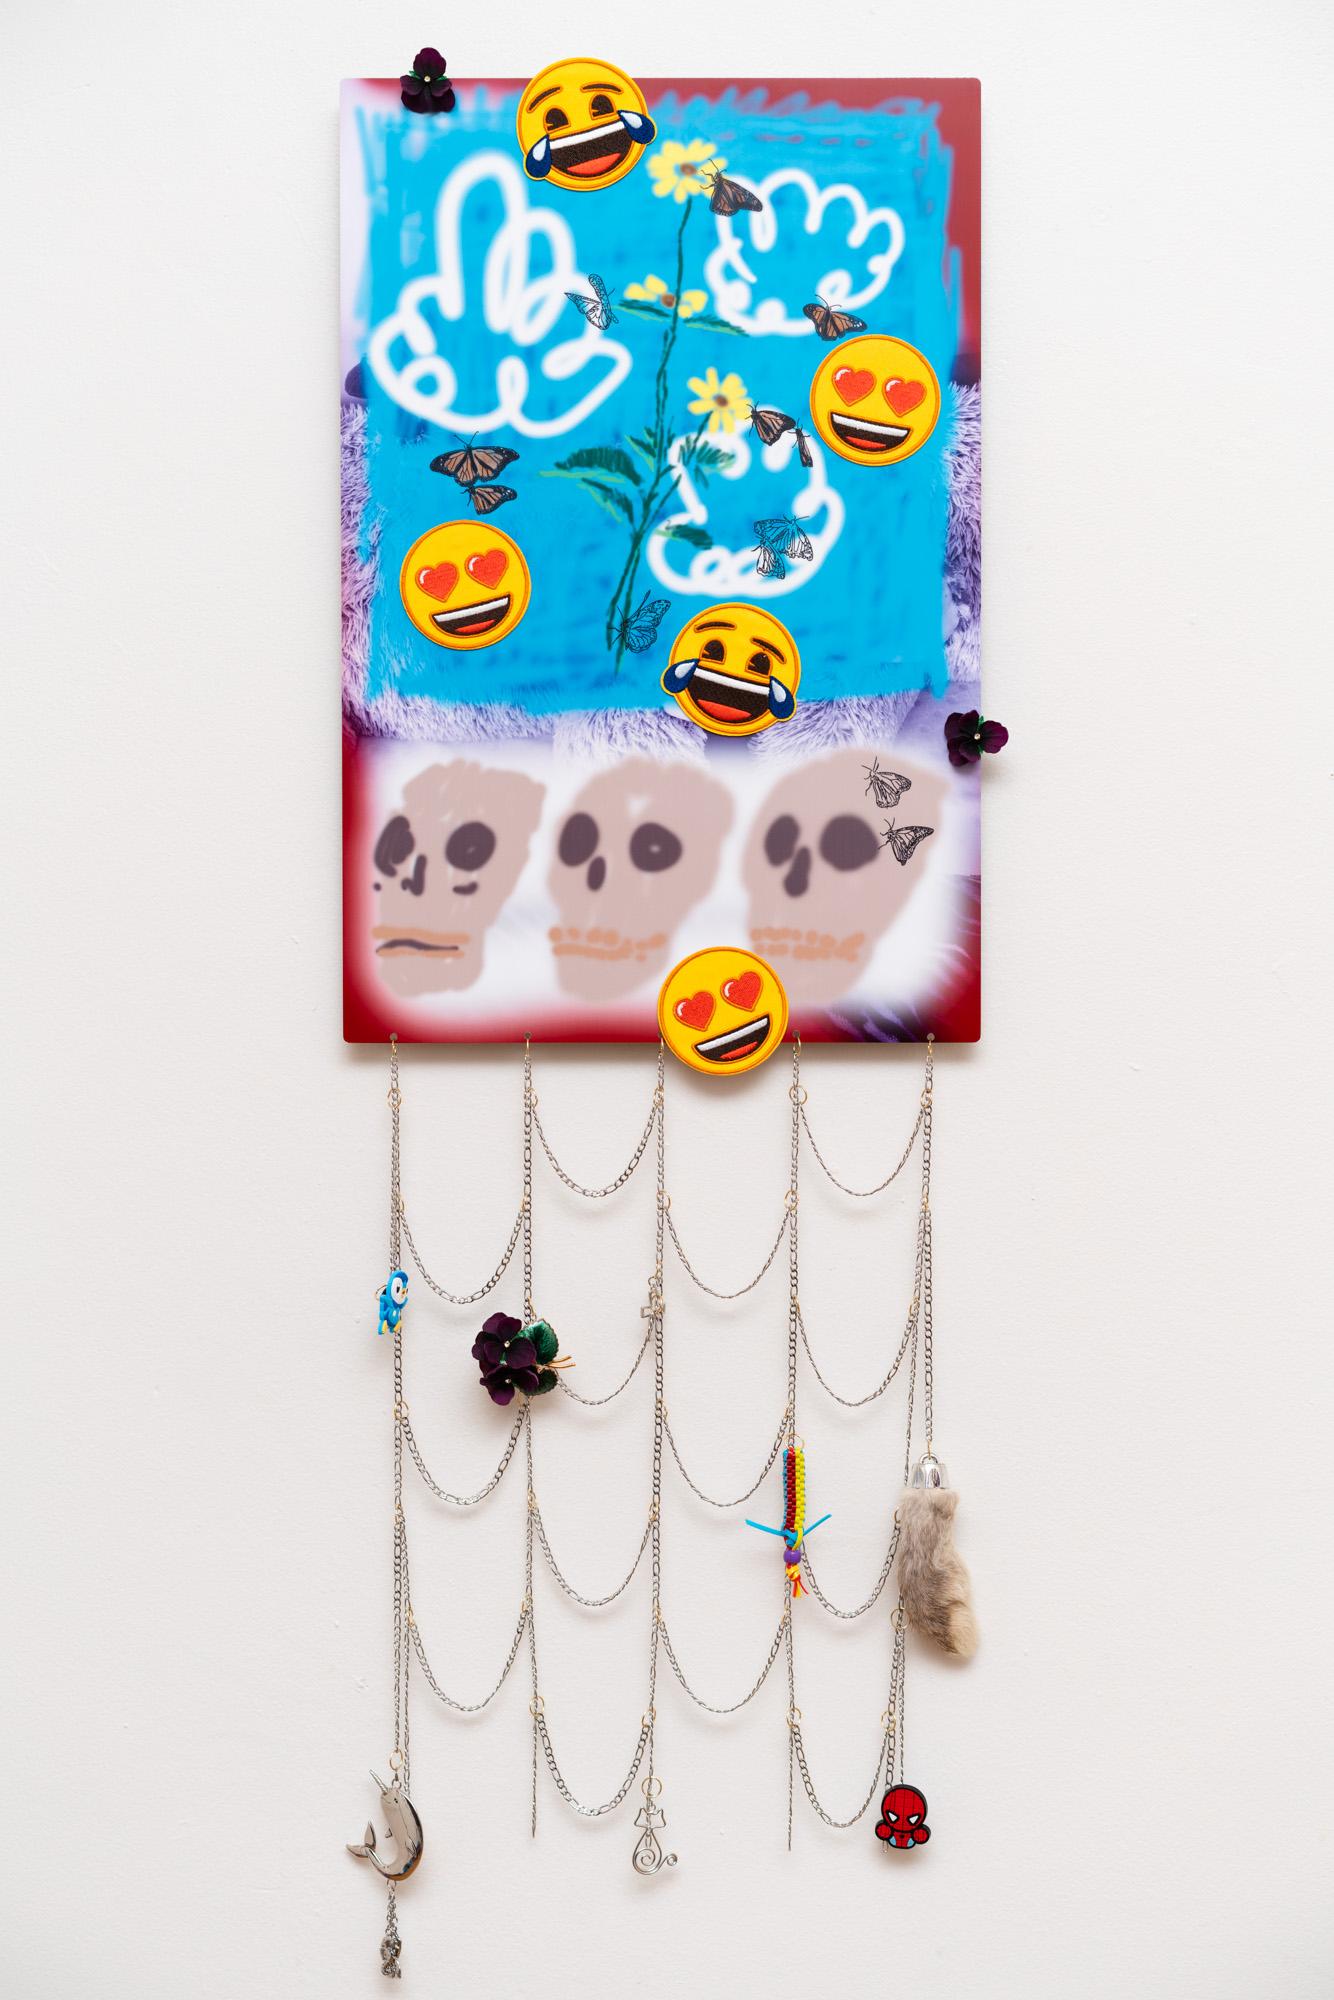 Nando Alvarez Perez Figurative Sculpture - Highly conceptual mixed media wall sculpture Contemporary skull emoji jewelry